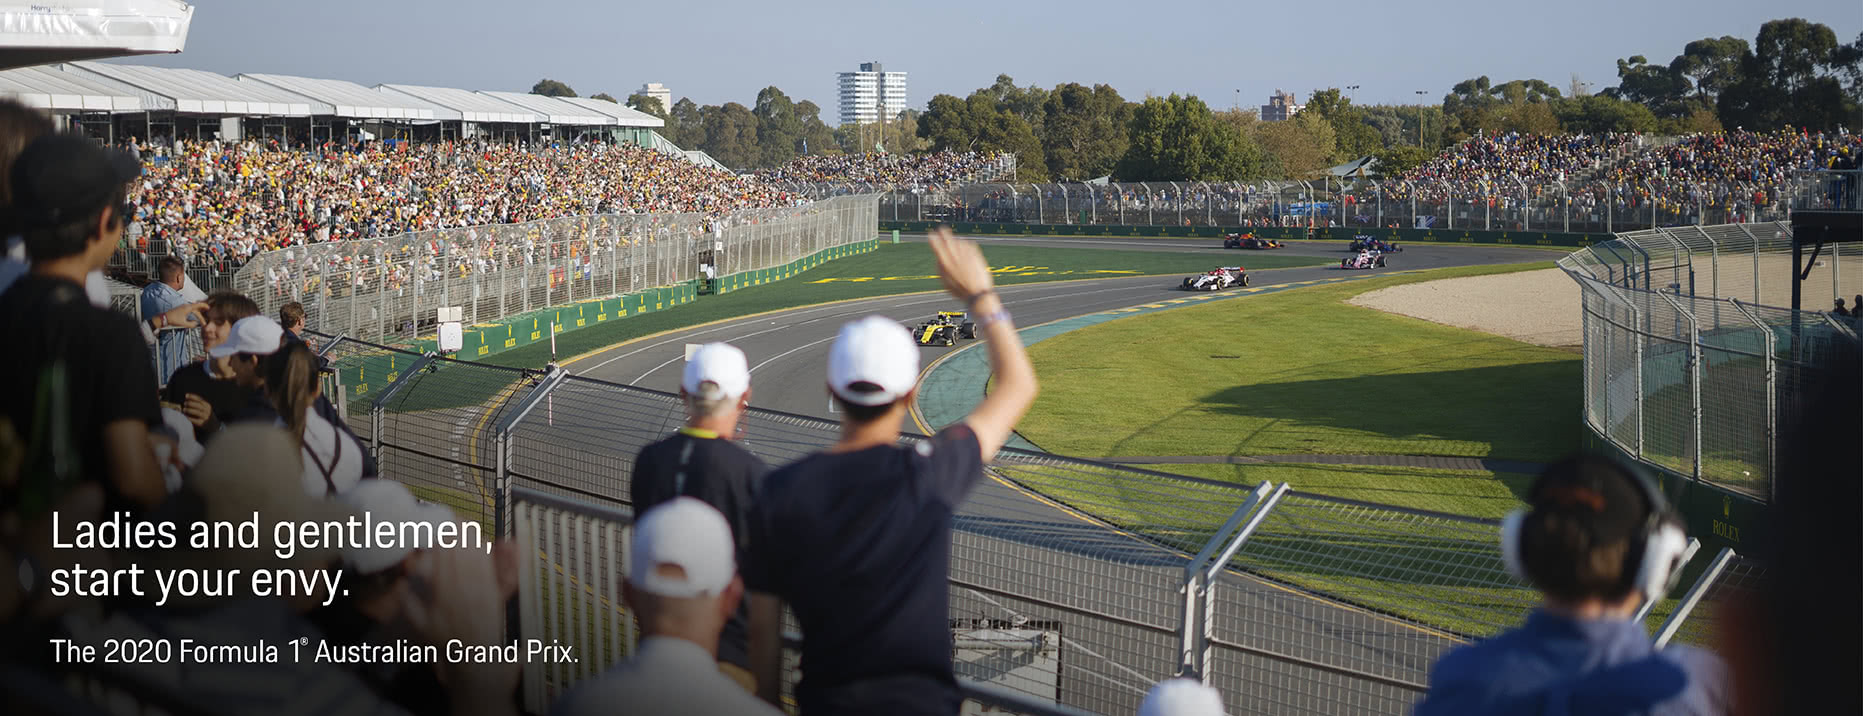 Porsche Pavilion at the 2020 Formula 1 Australian Grand Prix